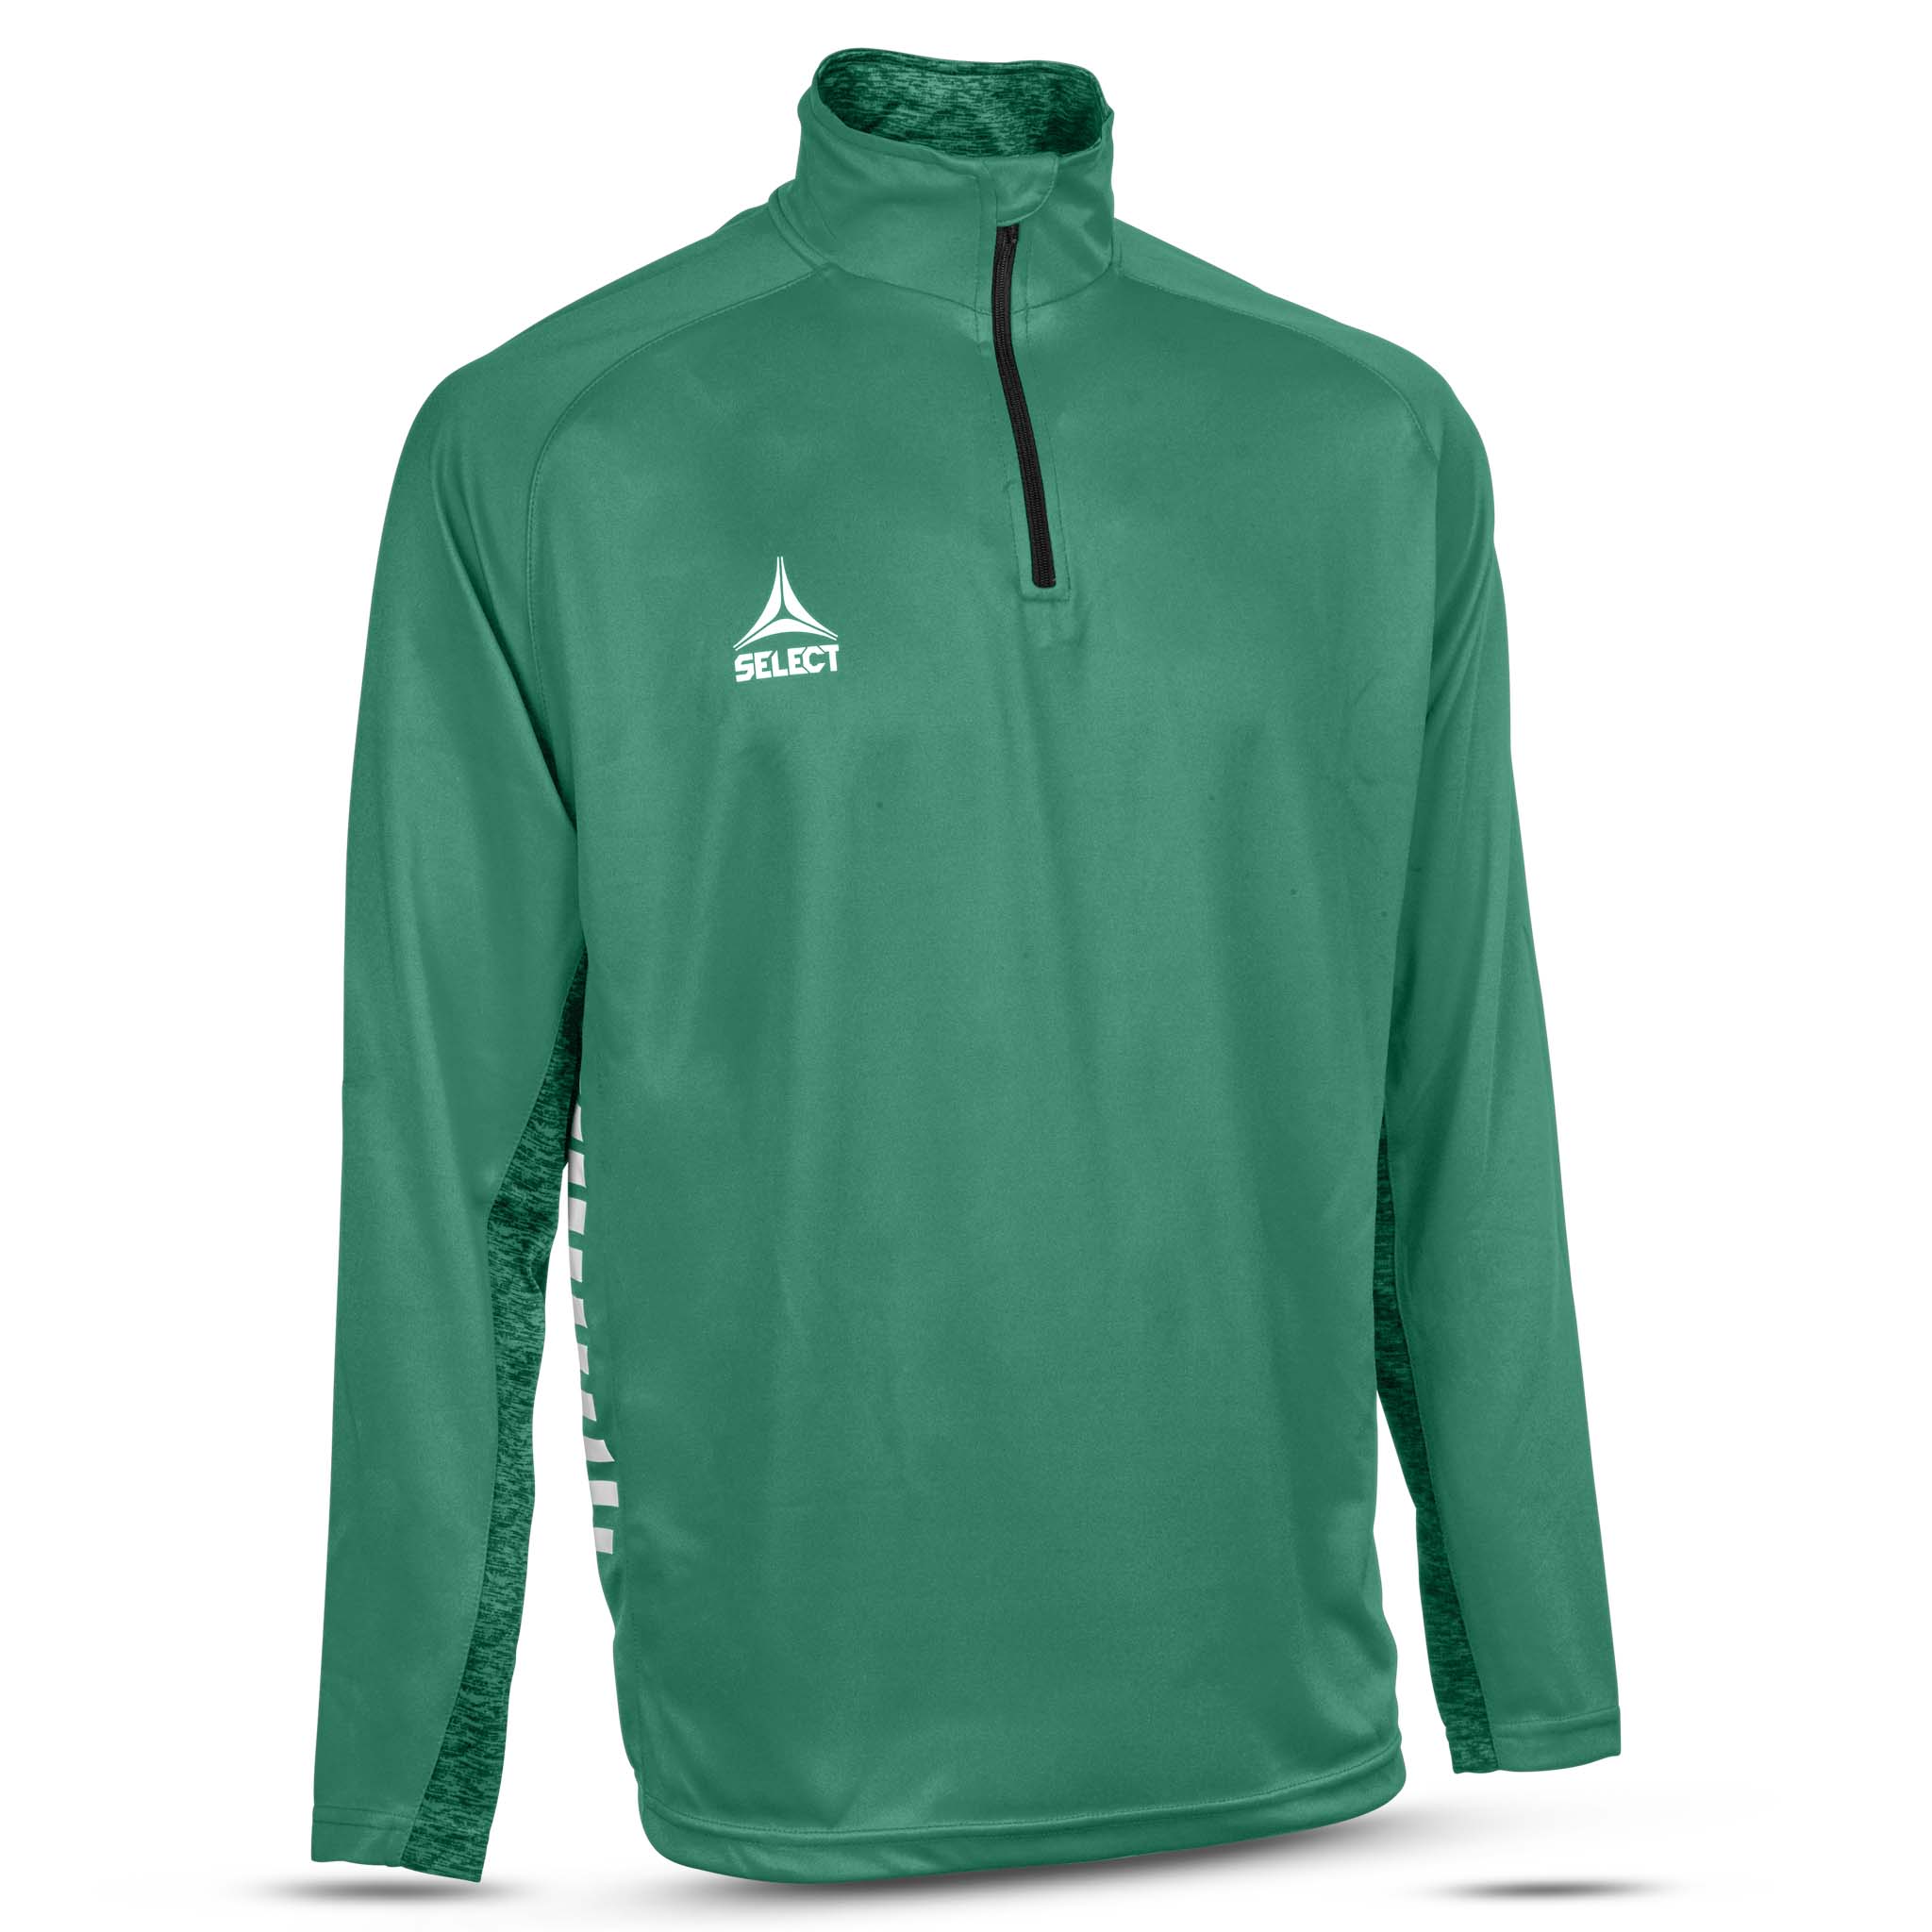 spain Träning sweatshirt 1/2 zip #färg_grön